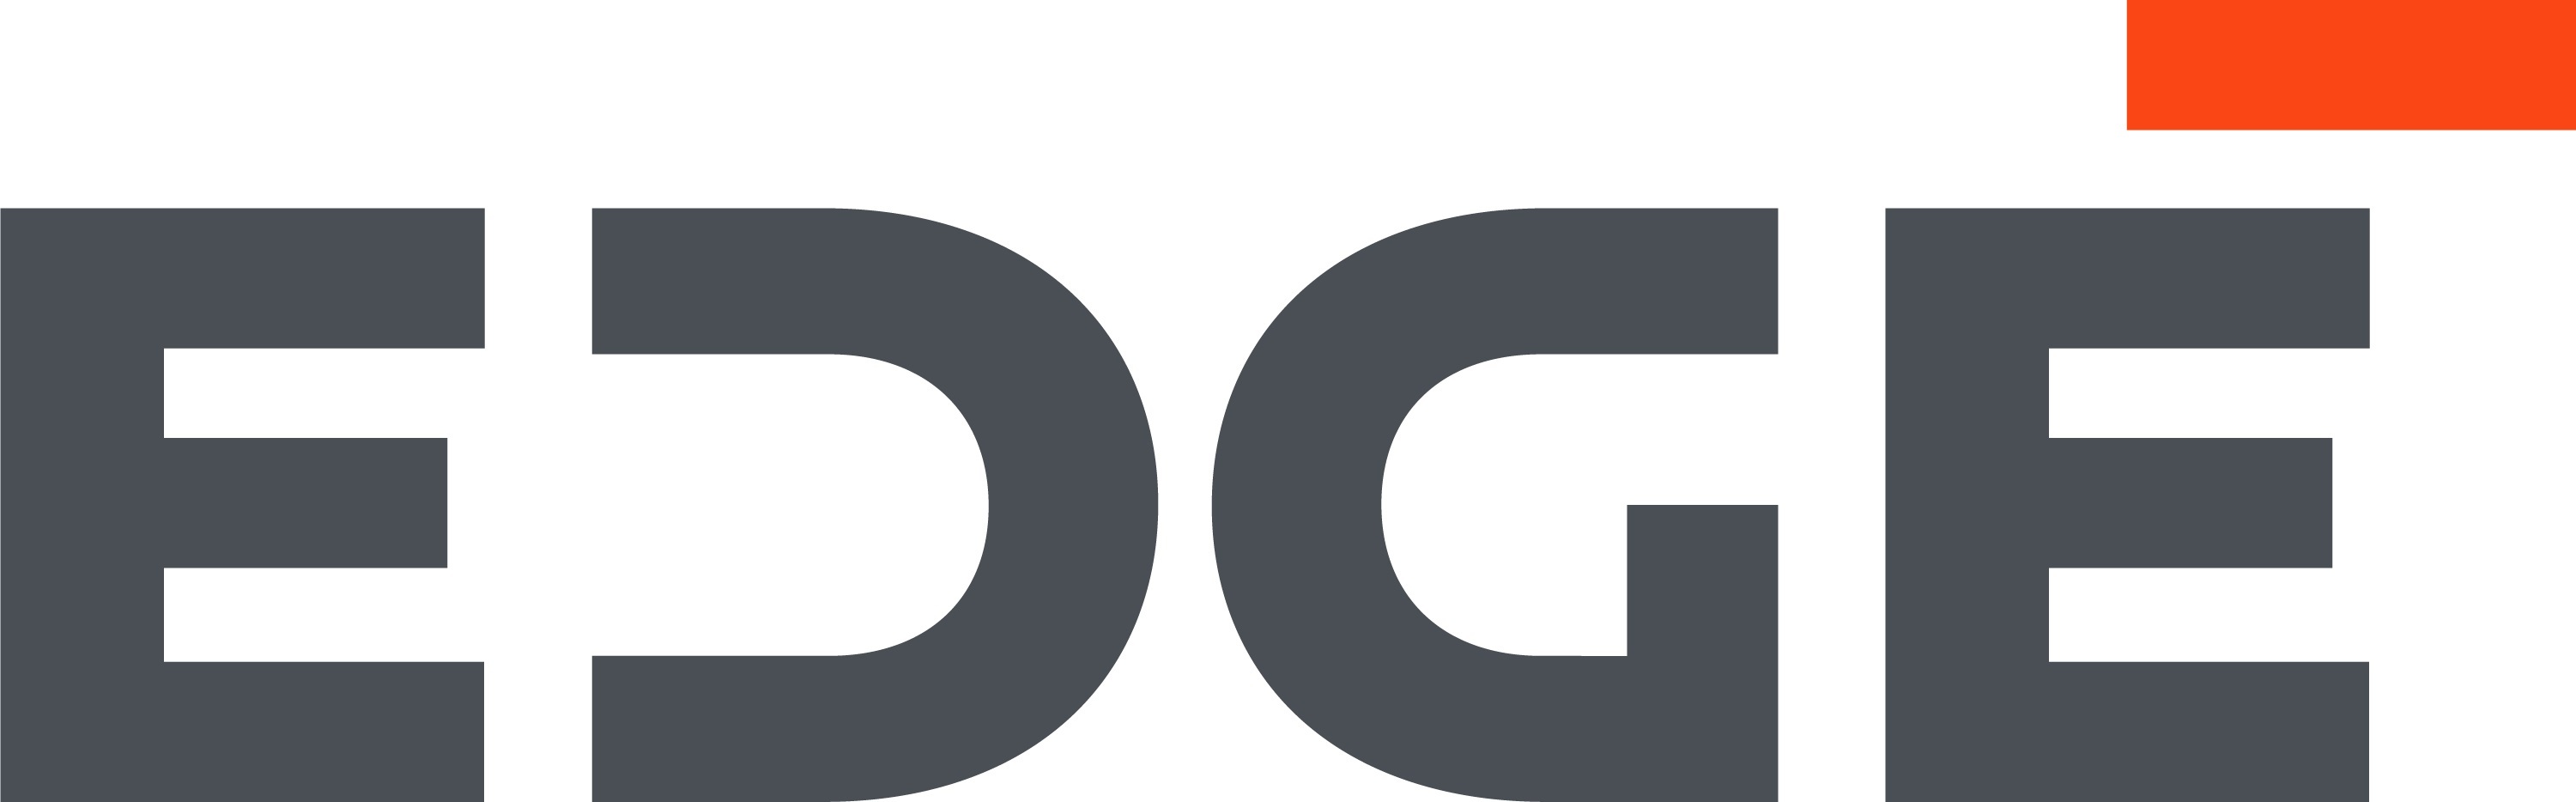 EDGE__--_logo.jpg